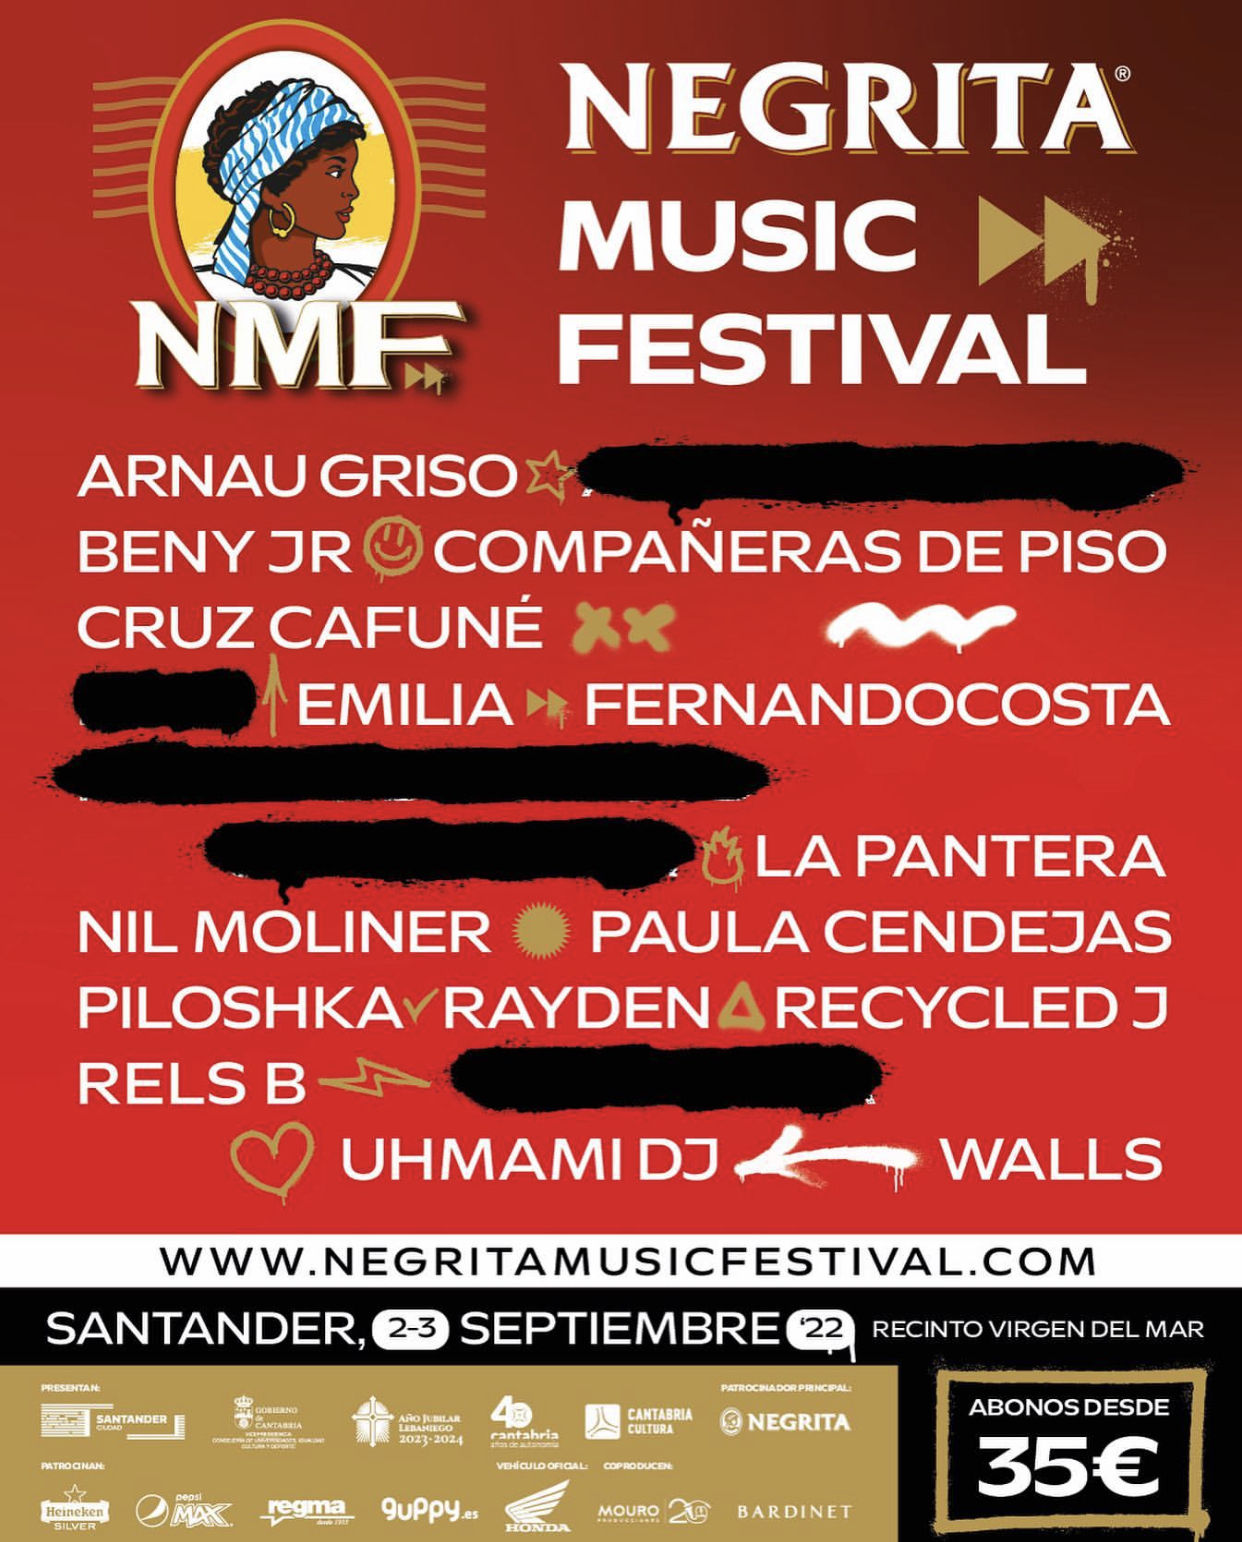 Negrita Music Festival 2022 – Santander: Entradas, horarios